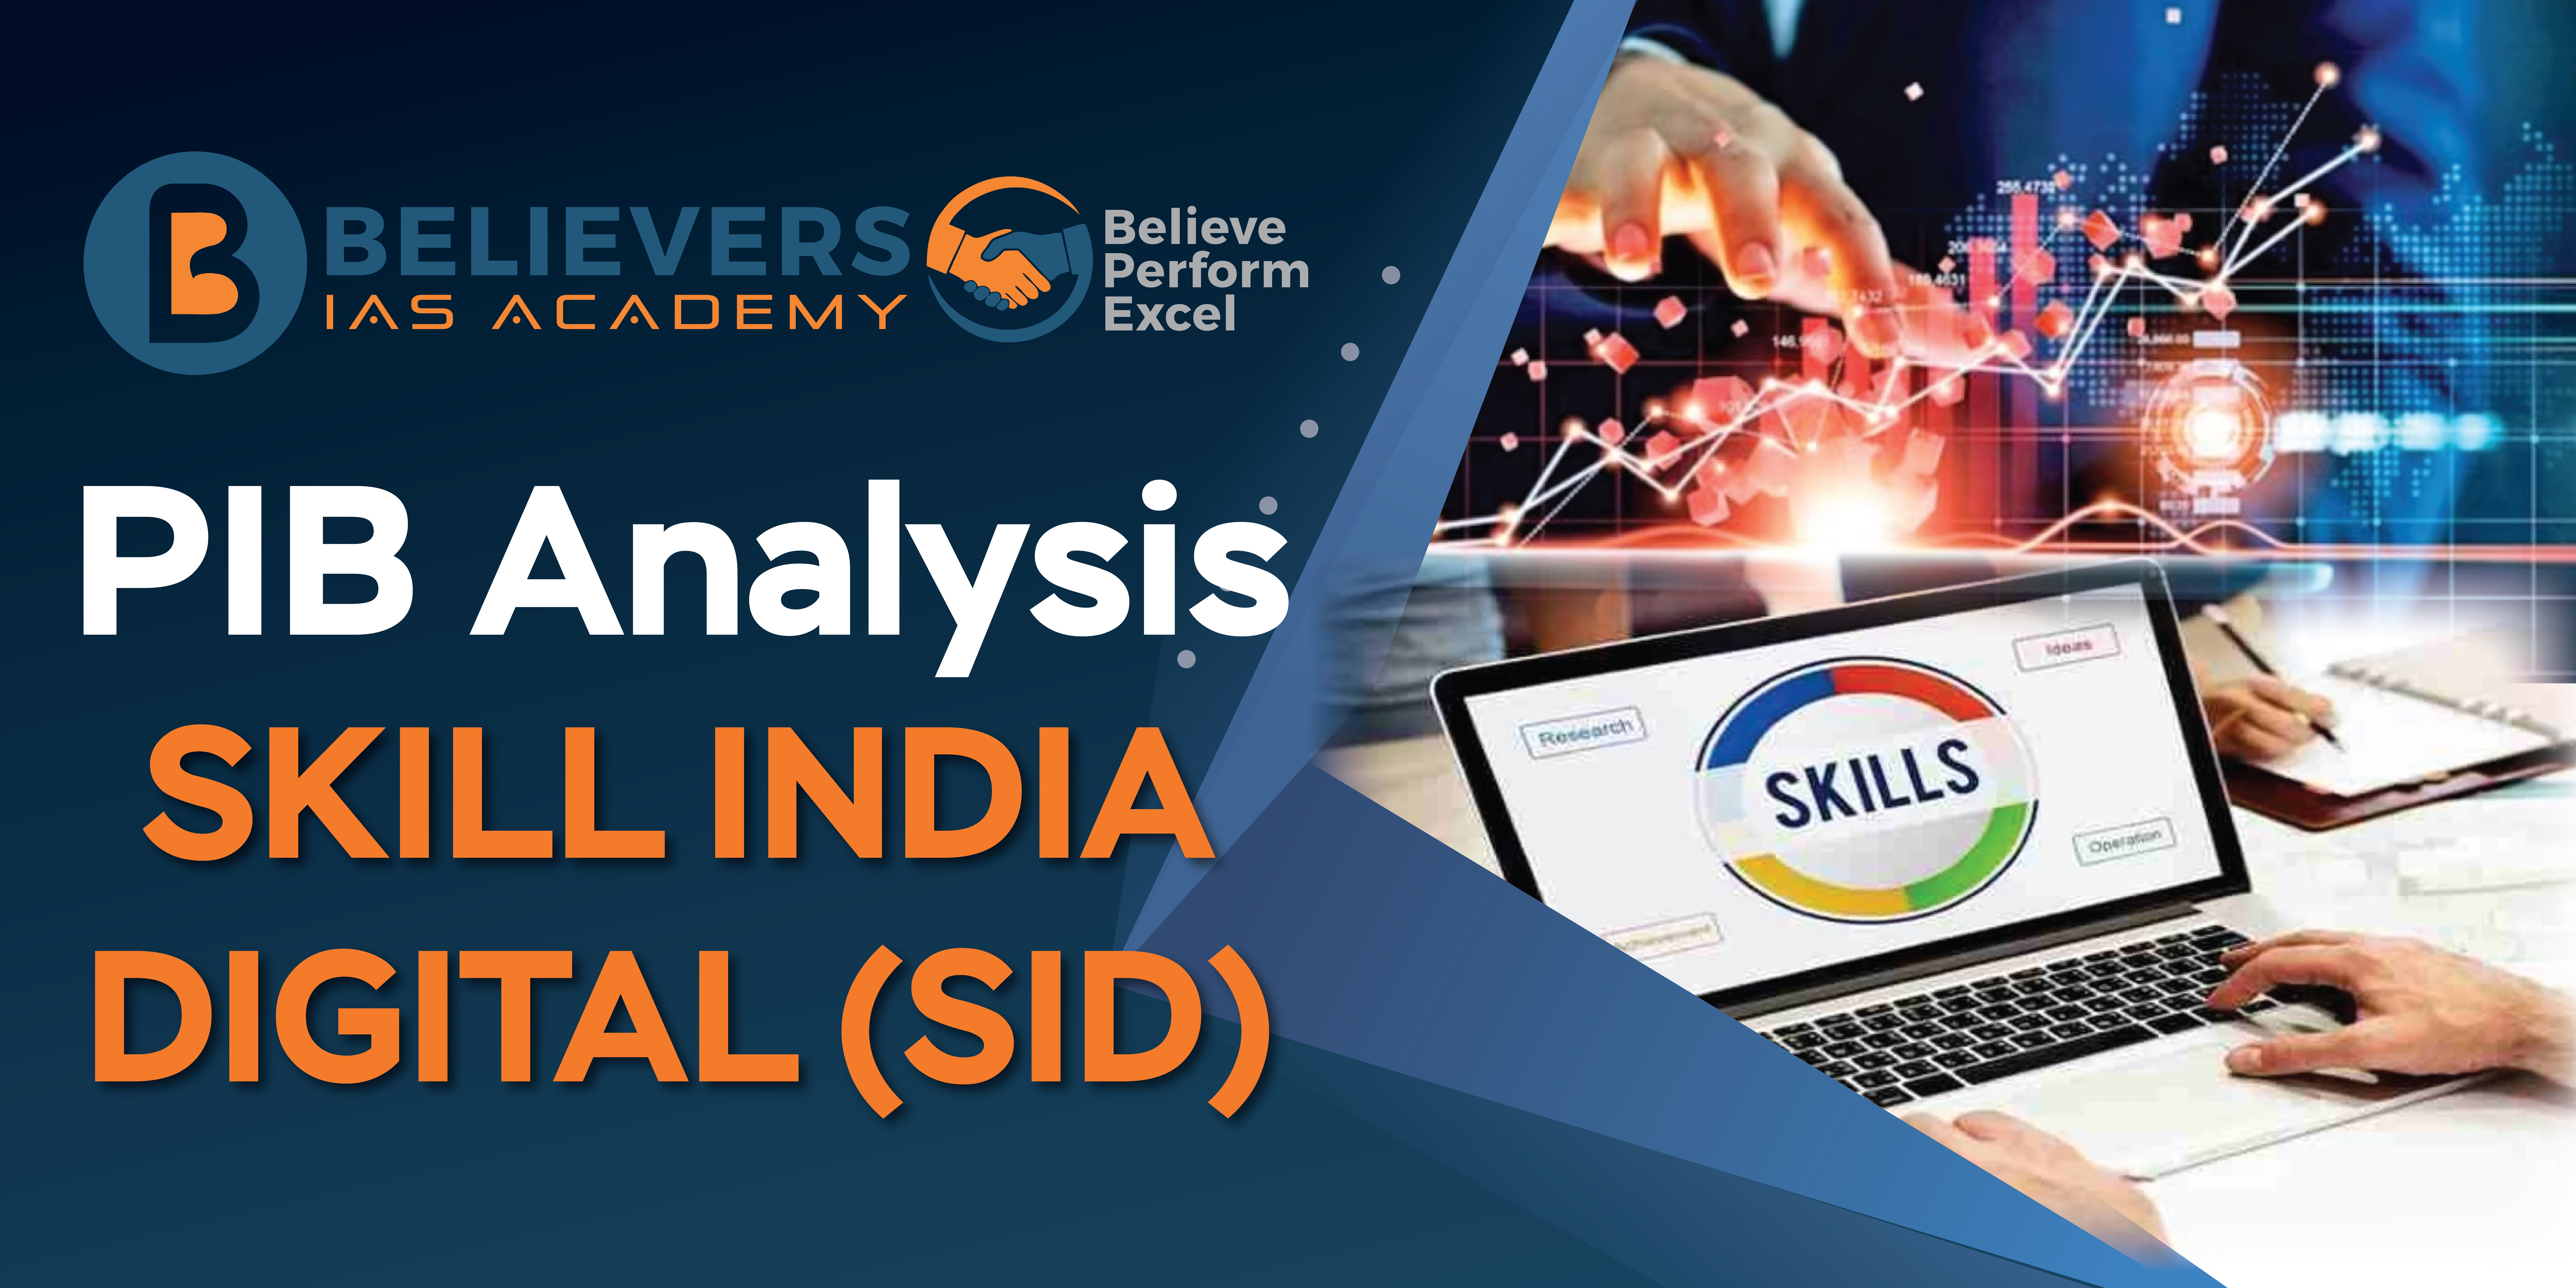 Skill India Digital (SID)